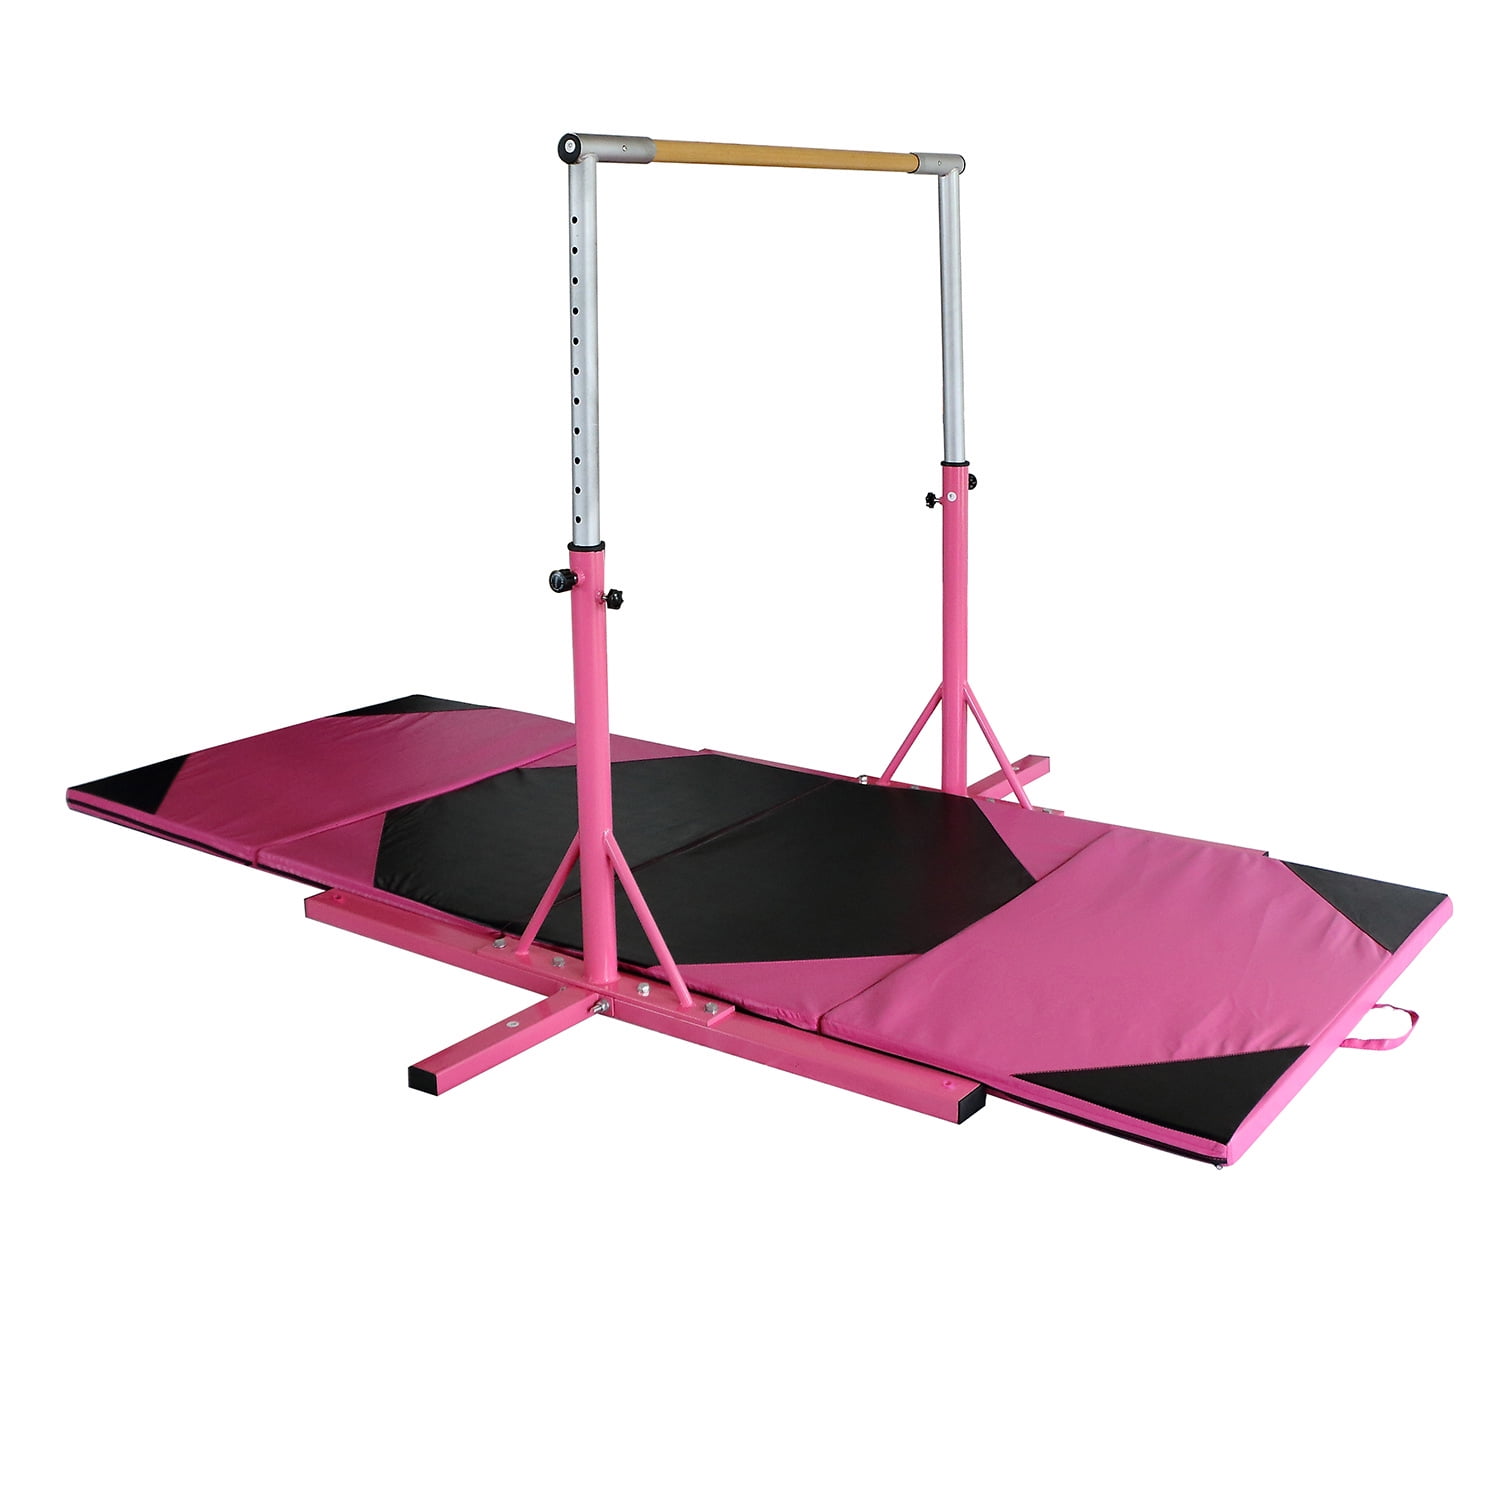 Details about   Height Adjustable Gymnastics Junior Training Horizontal Bar W/Gym Mat Pink 